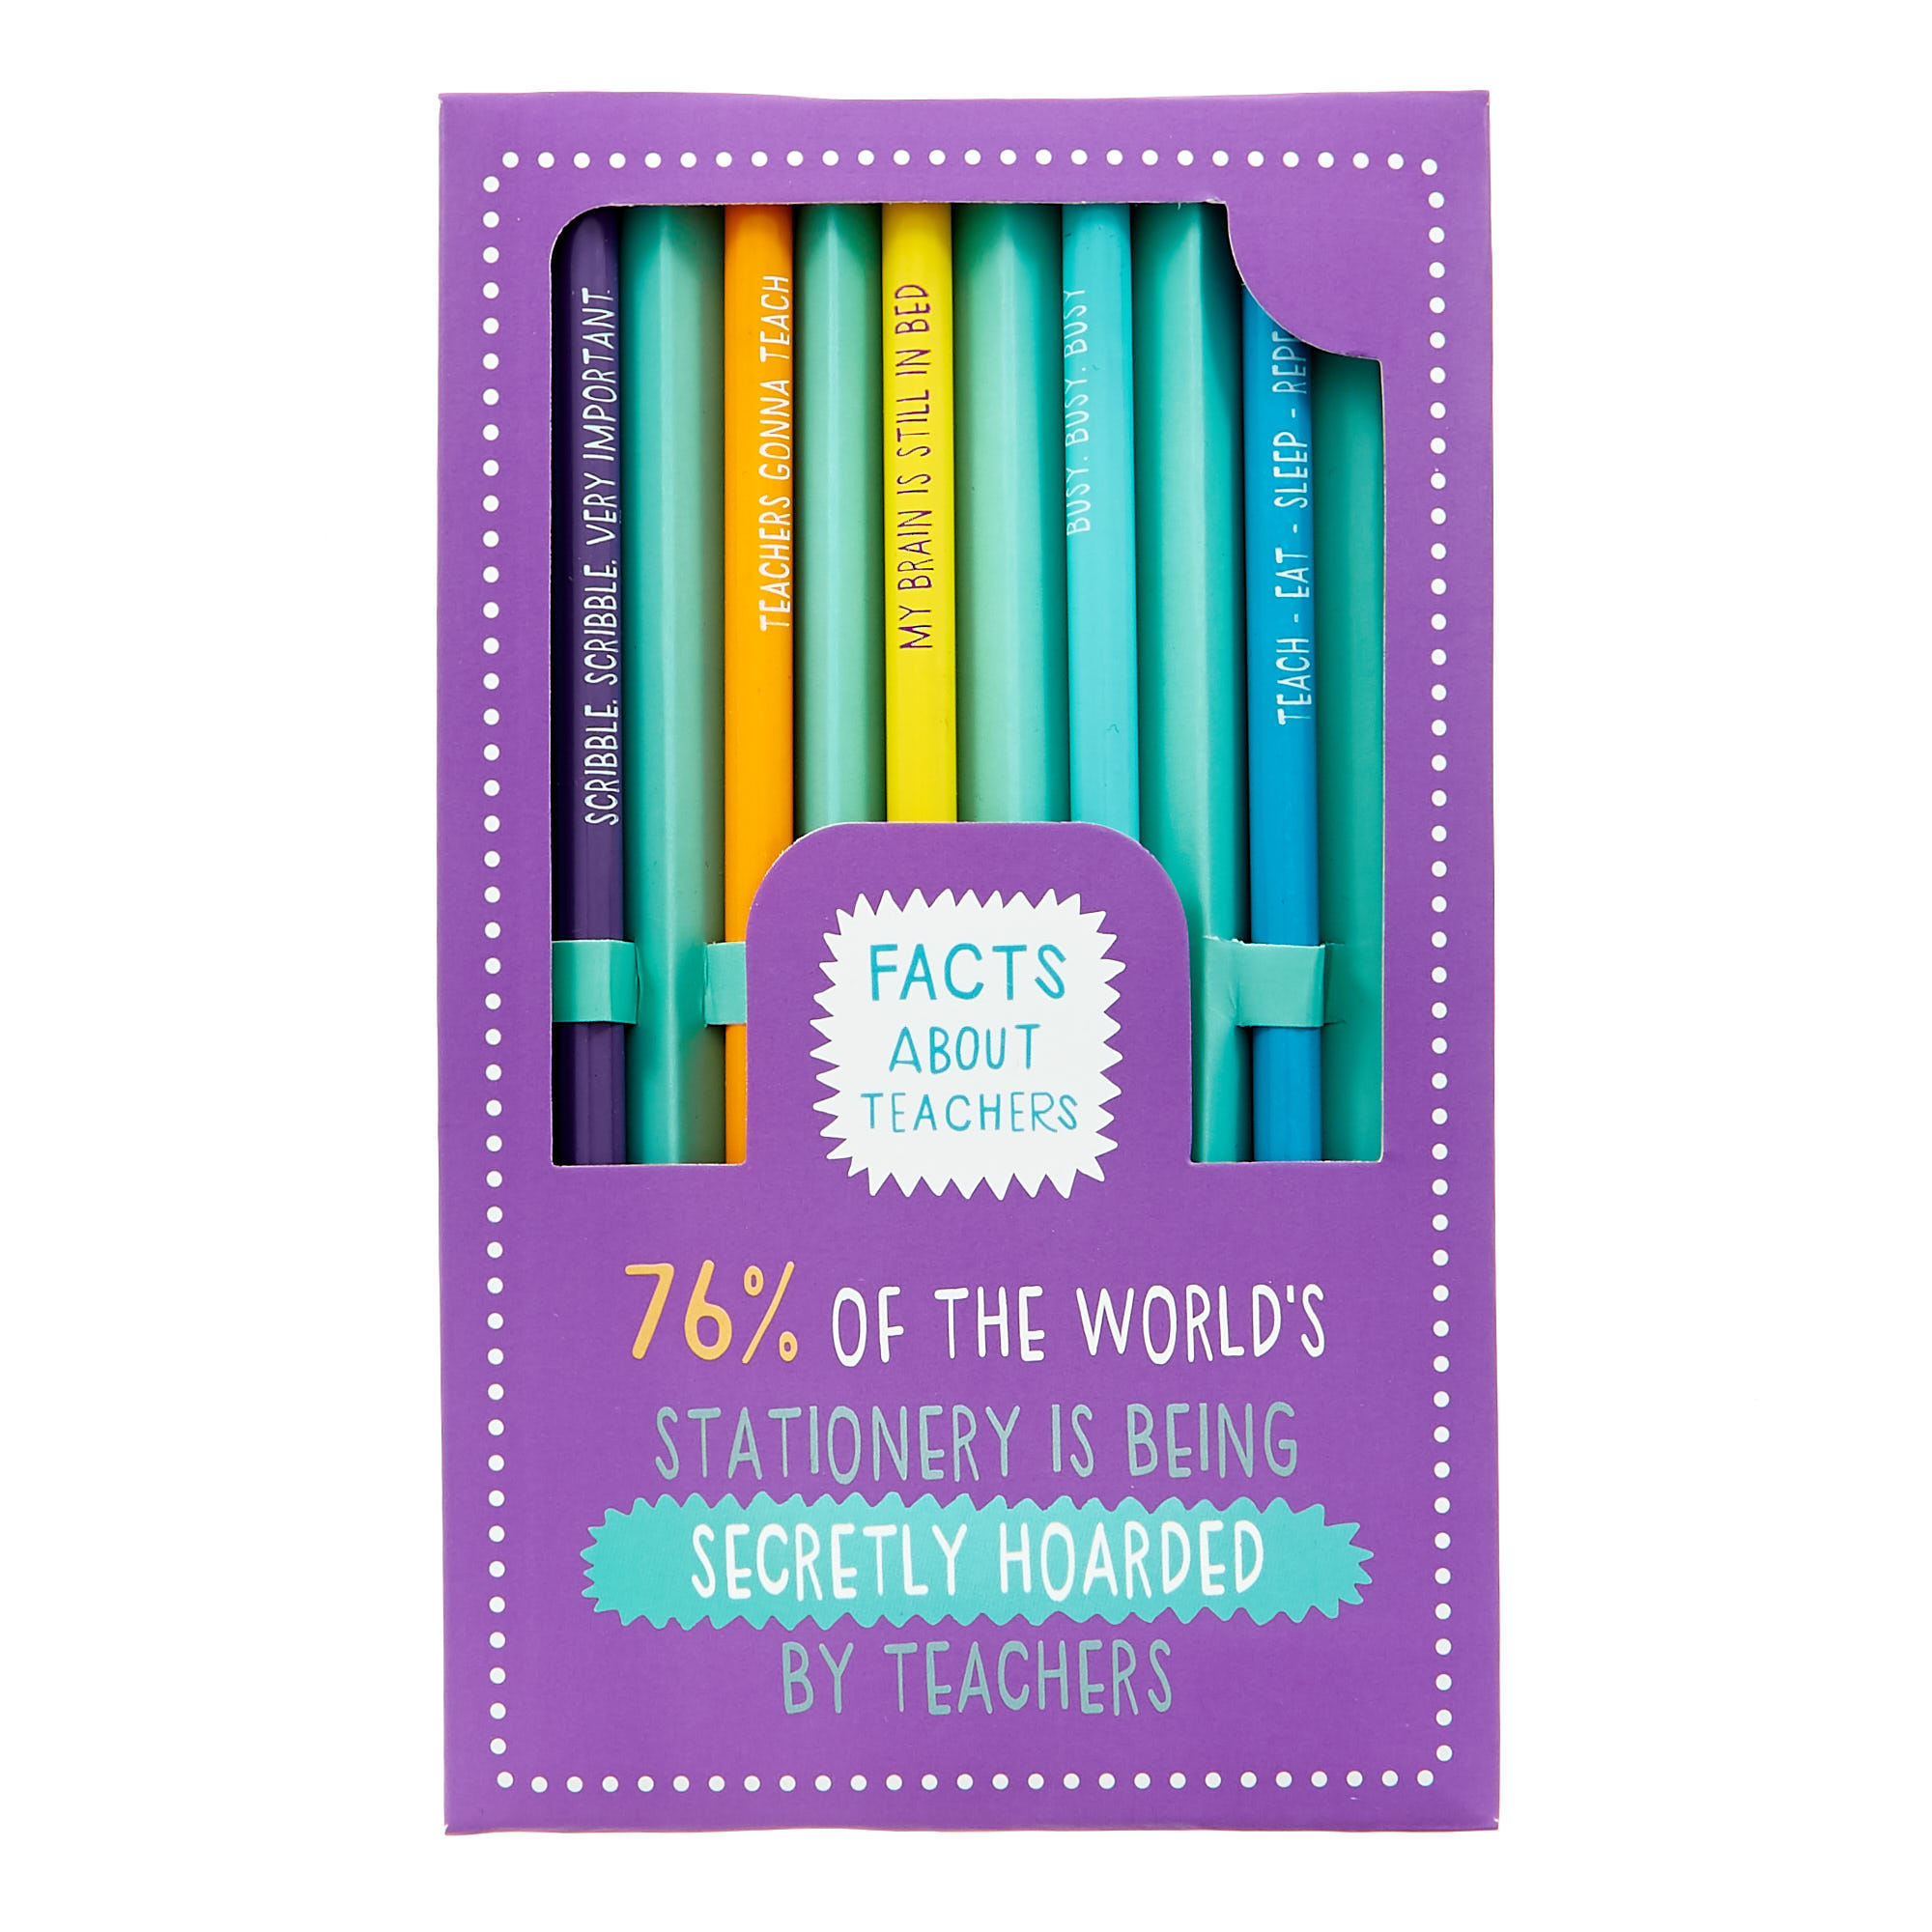 Facts About Teachers pencils - Set of 5